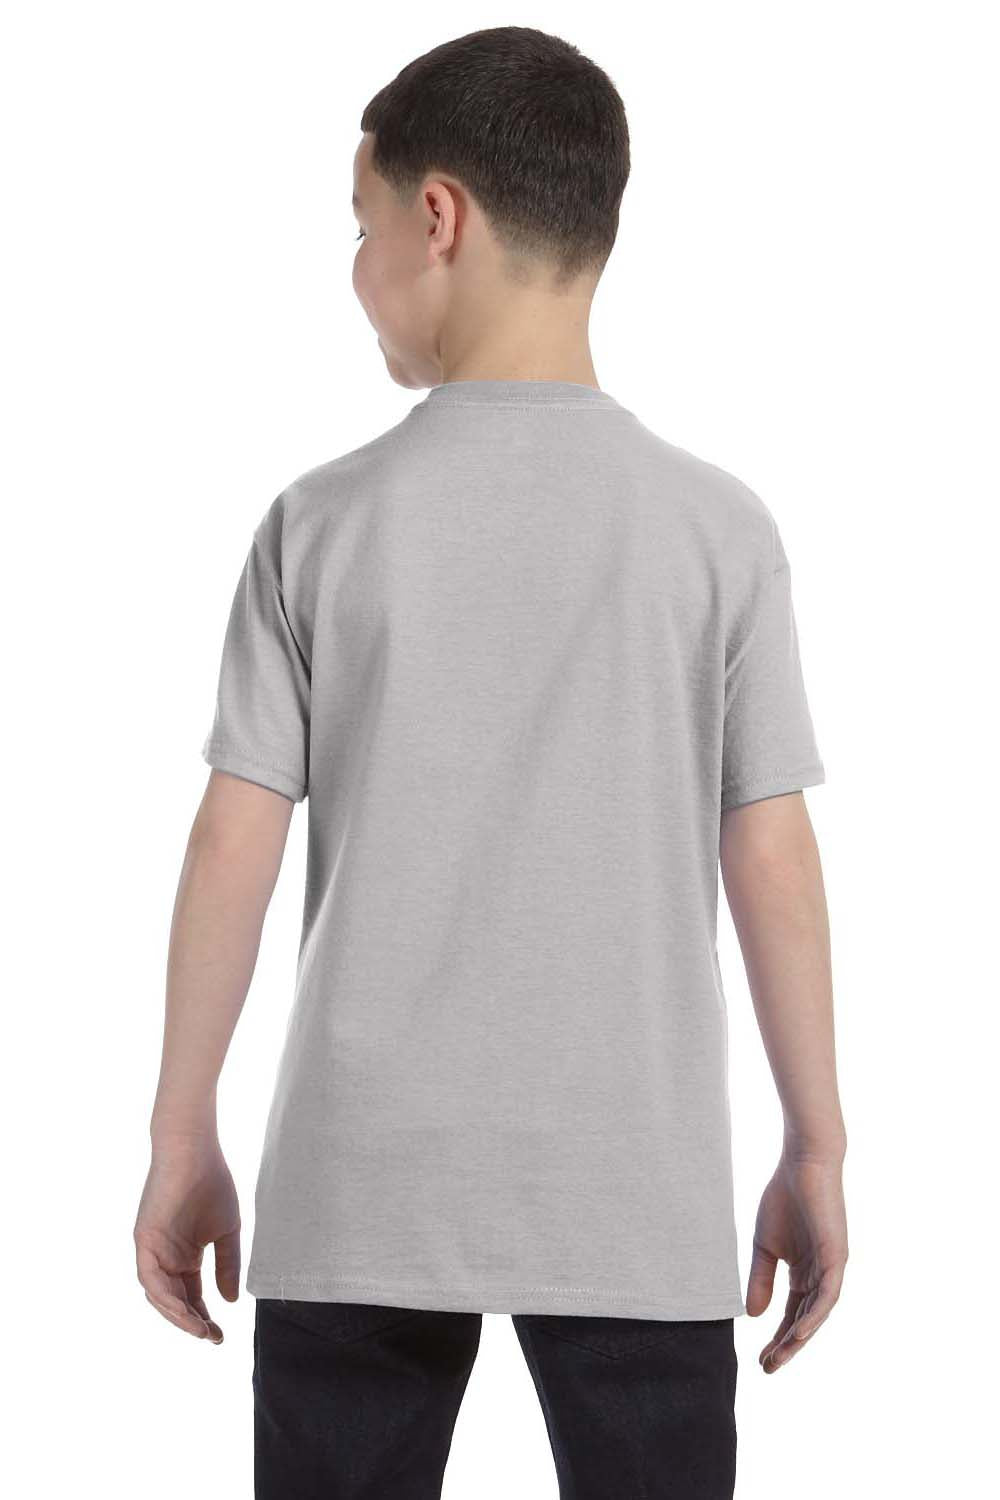 Hanes 54500 Youth ComfortSoft Short Sleeve Crewneck T-Shirt Light Steel Grey Back